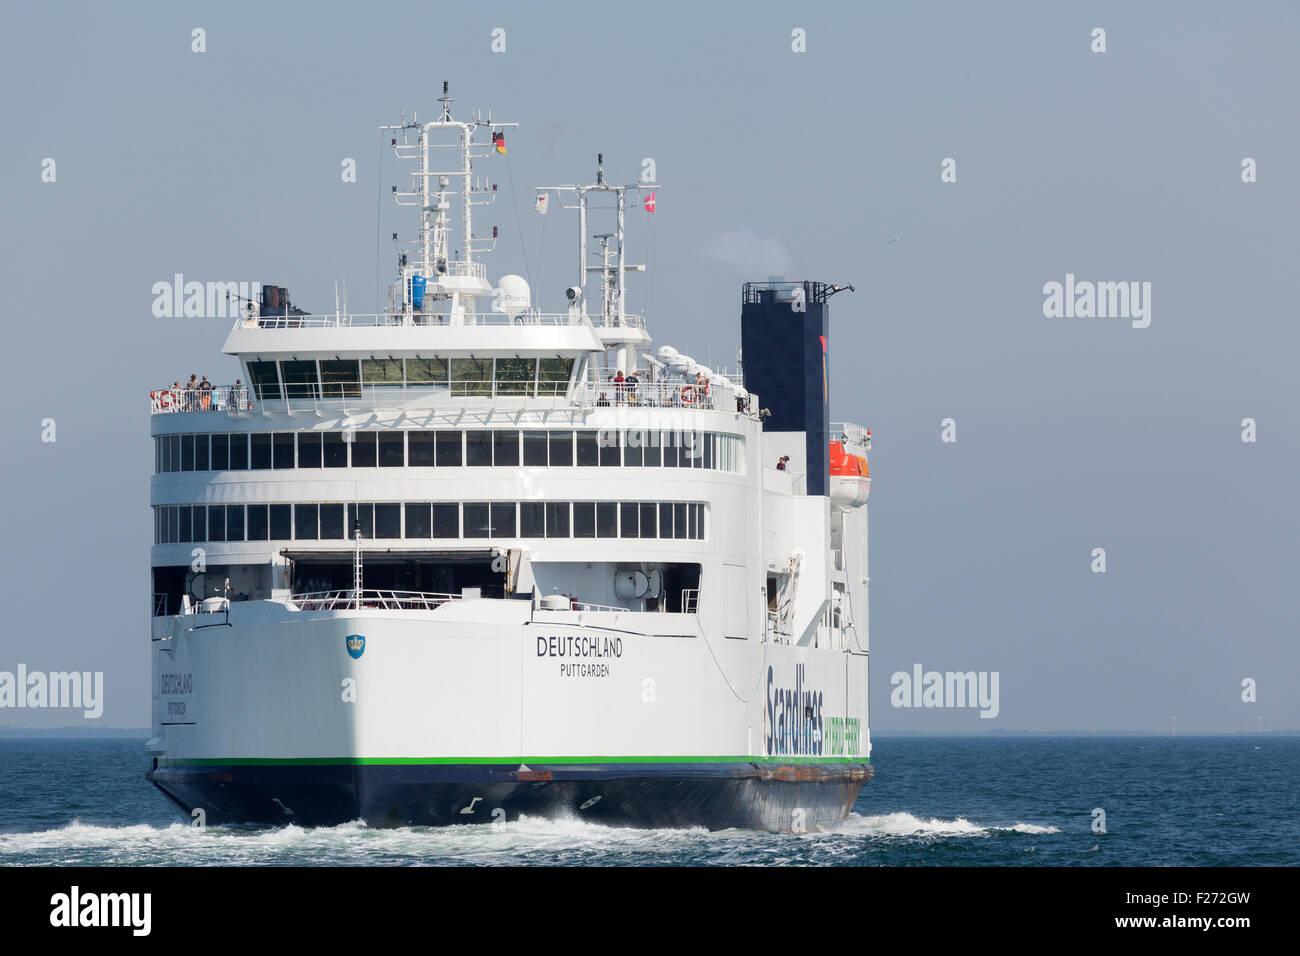 A Scandlines ferry off Puttgarden, Germany Stock Photo - Alamy